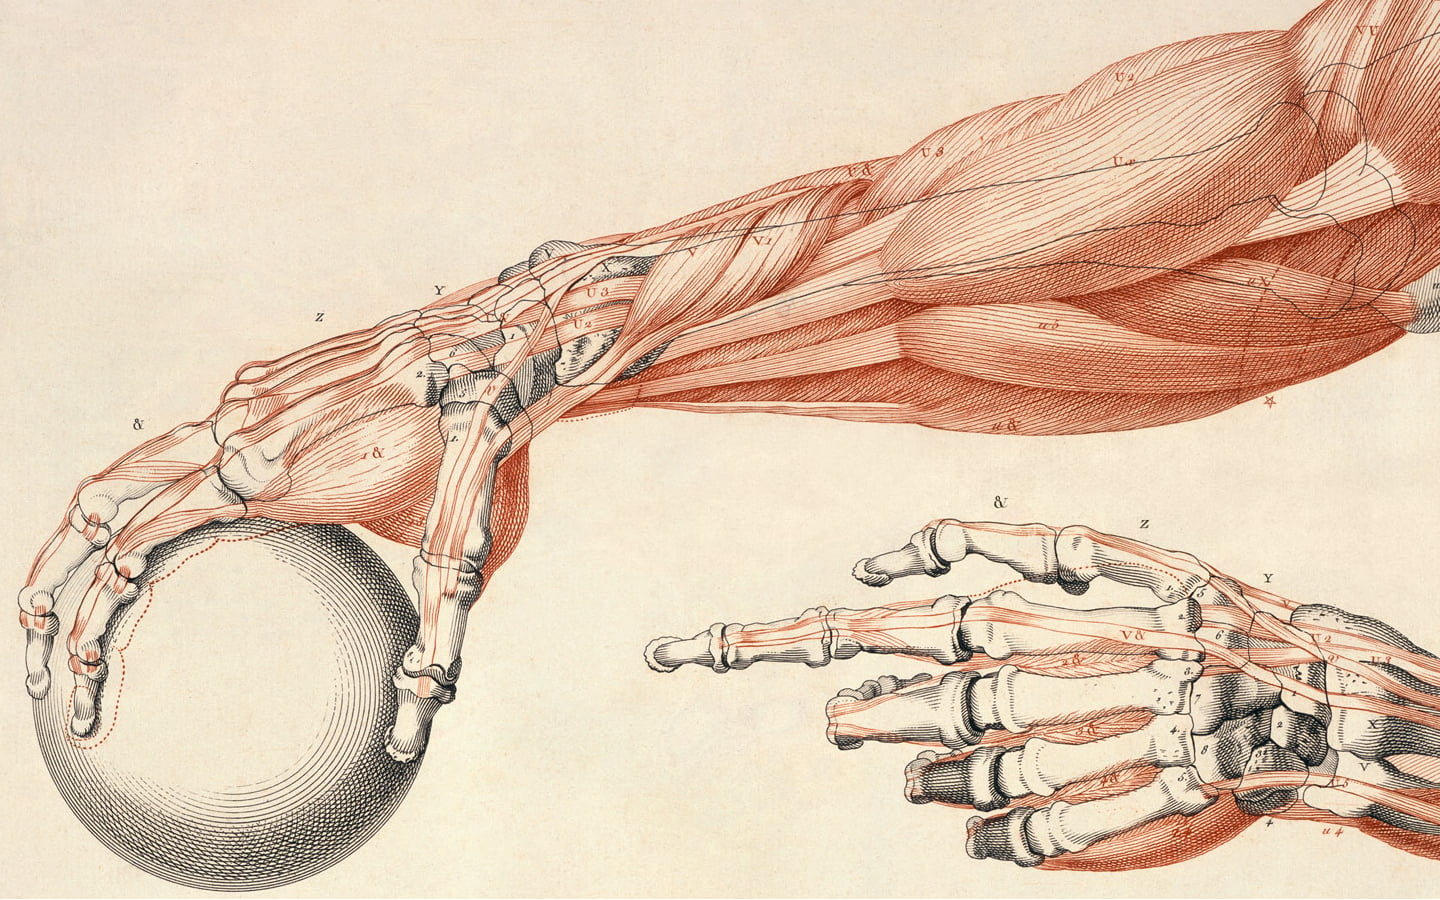 Human Arms Anatomy Illustration Hd Wallpaper Wallpaper Flare